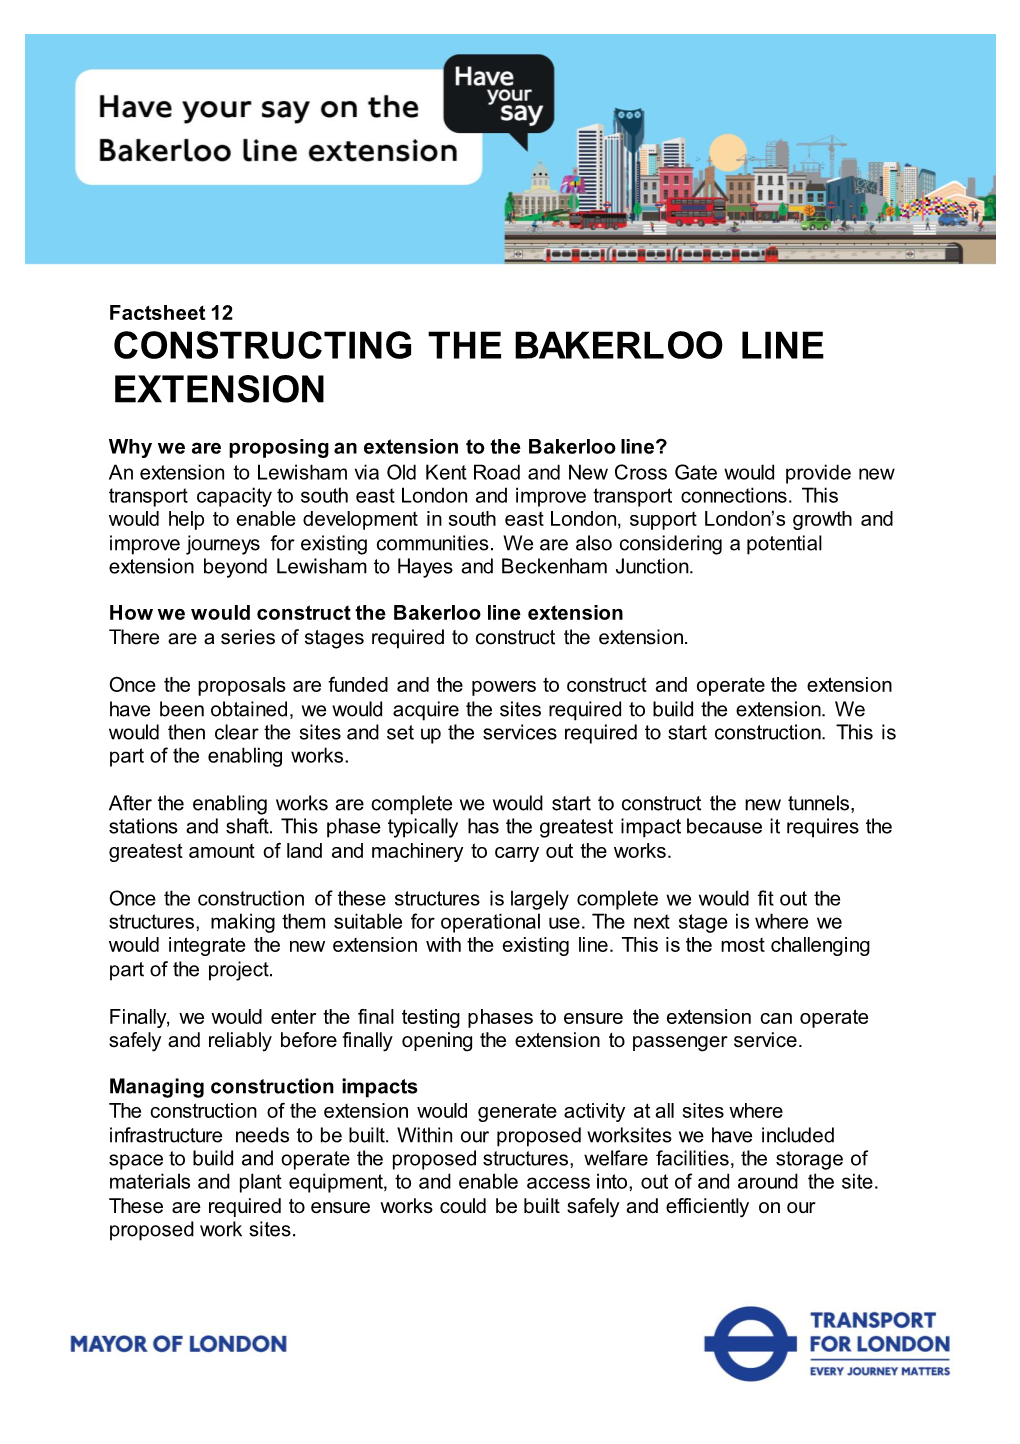 Factsheet 12. Constructing the Bakerloo Line Extension